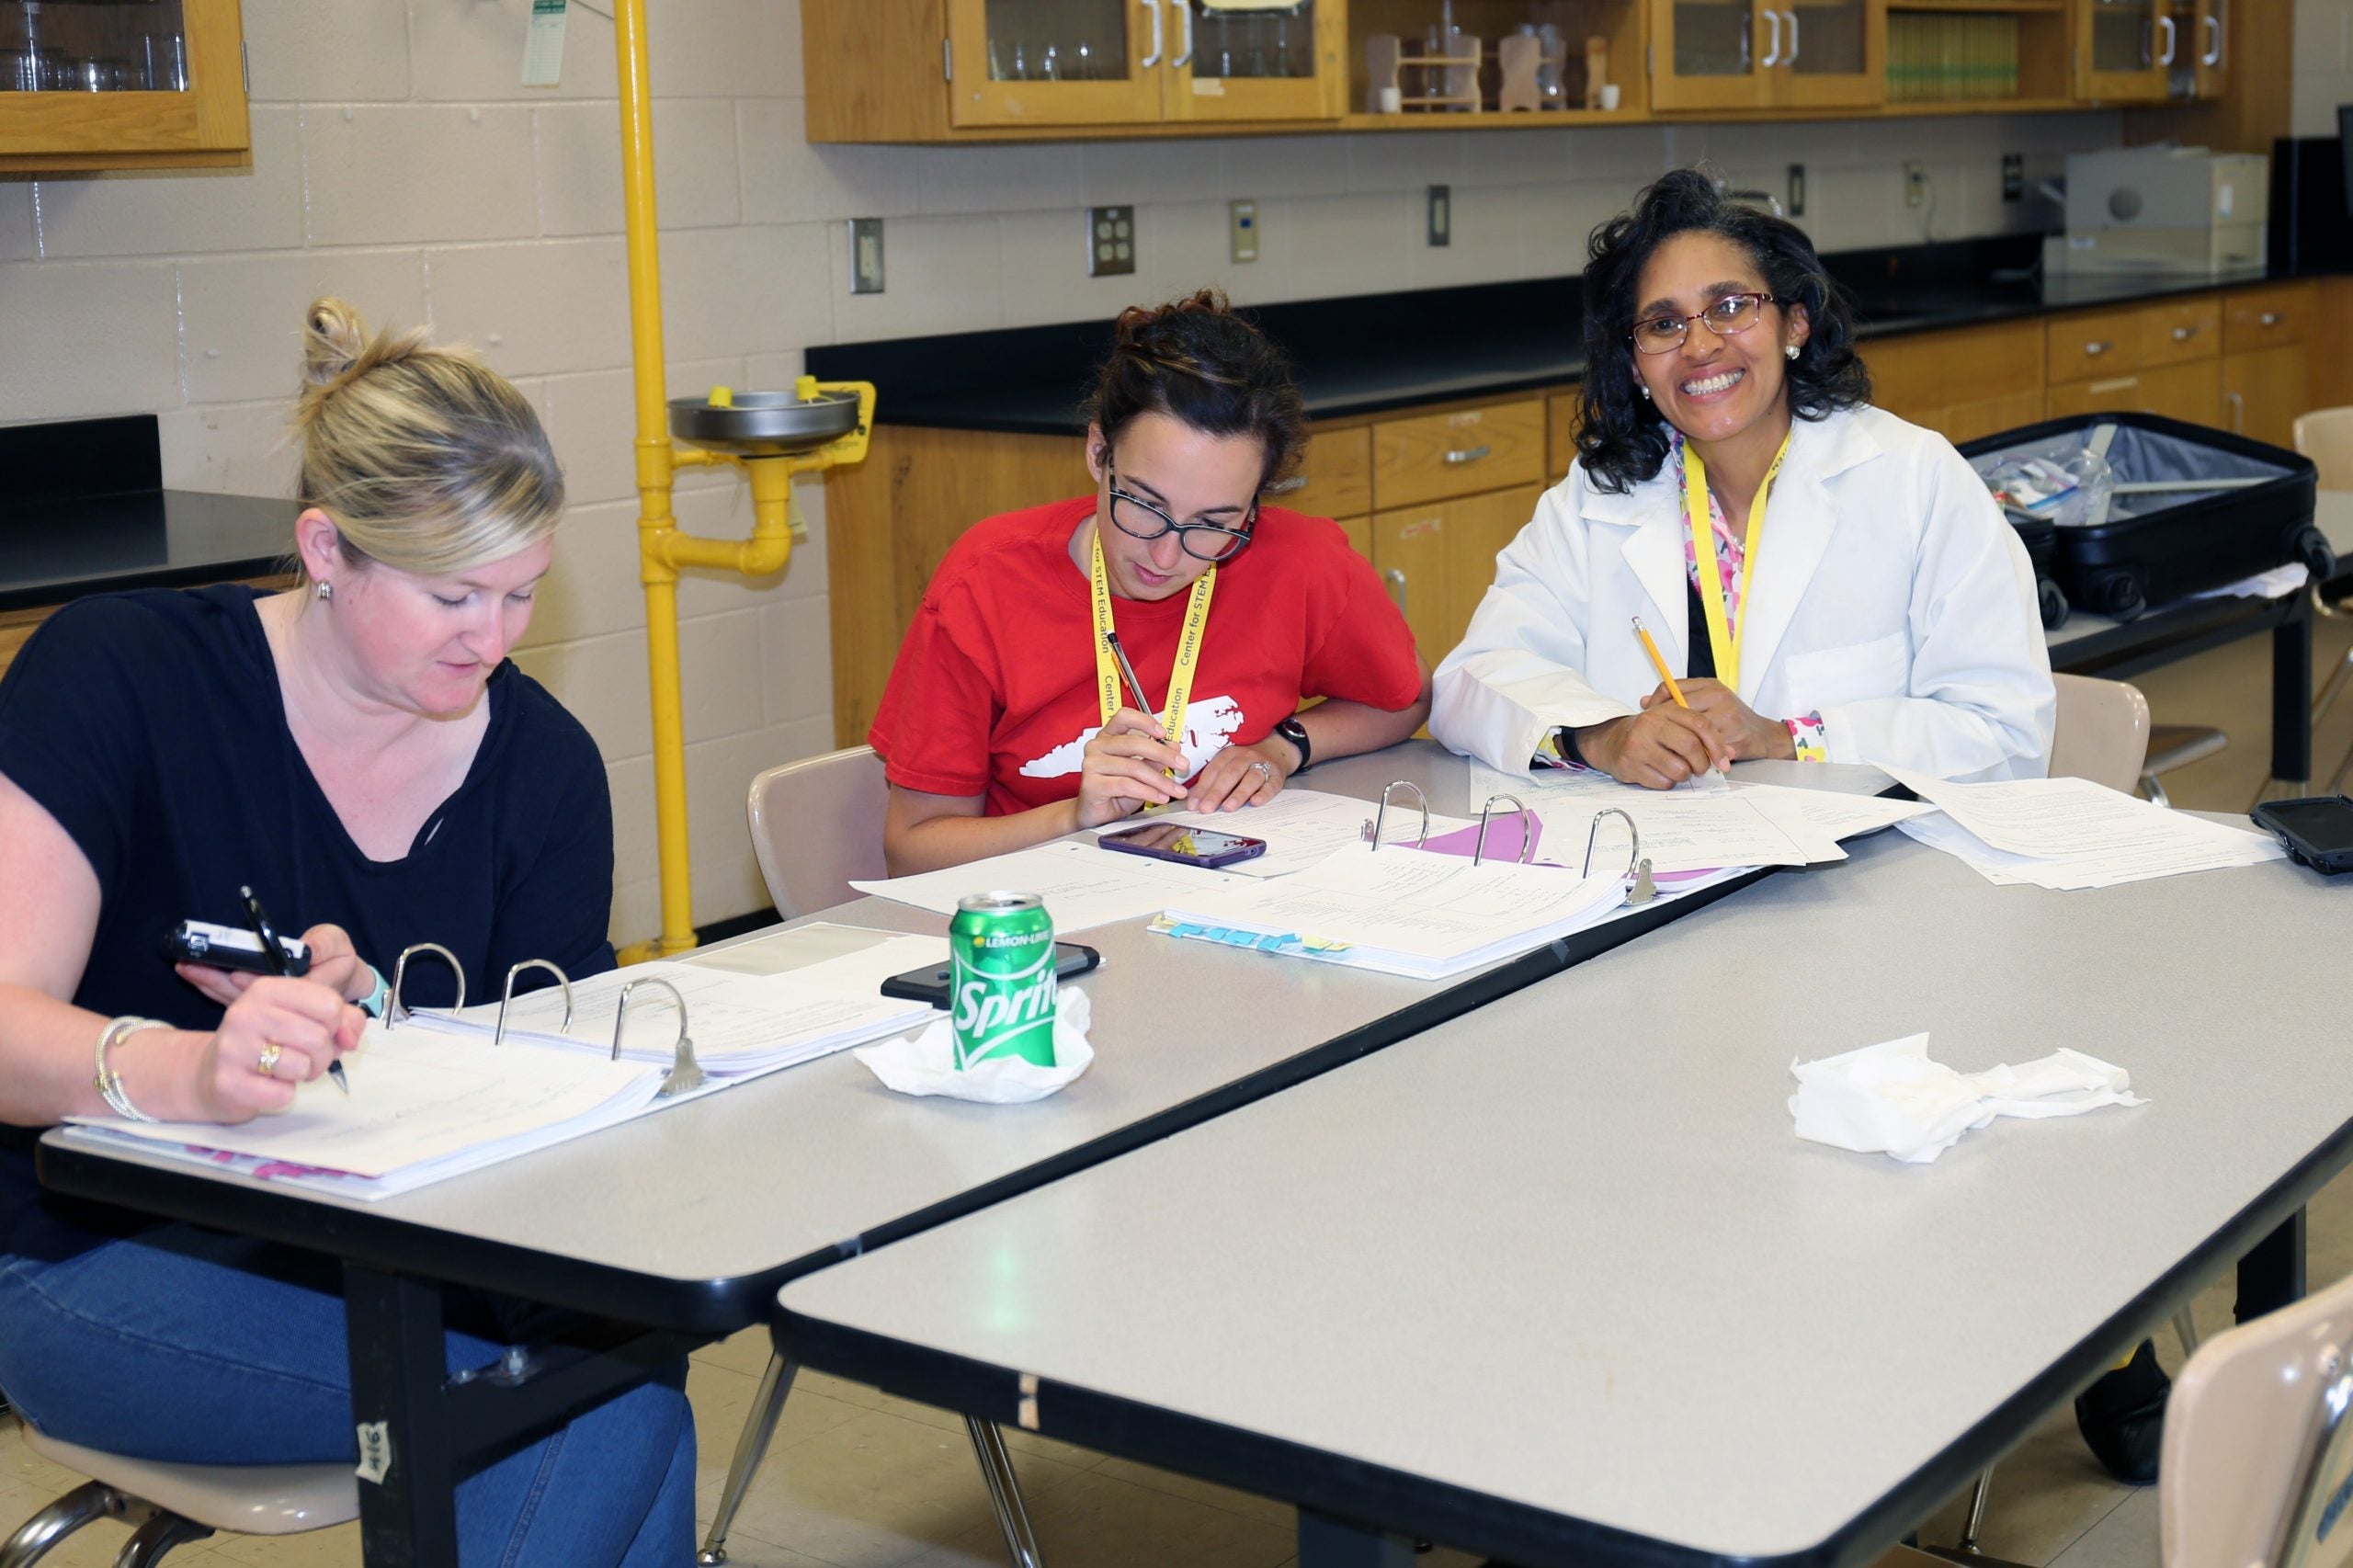 Three AP Chemistry students work on tests